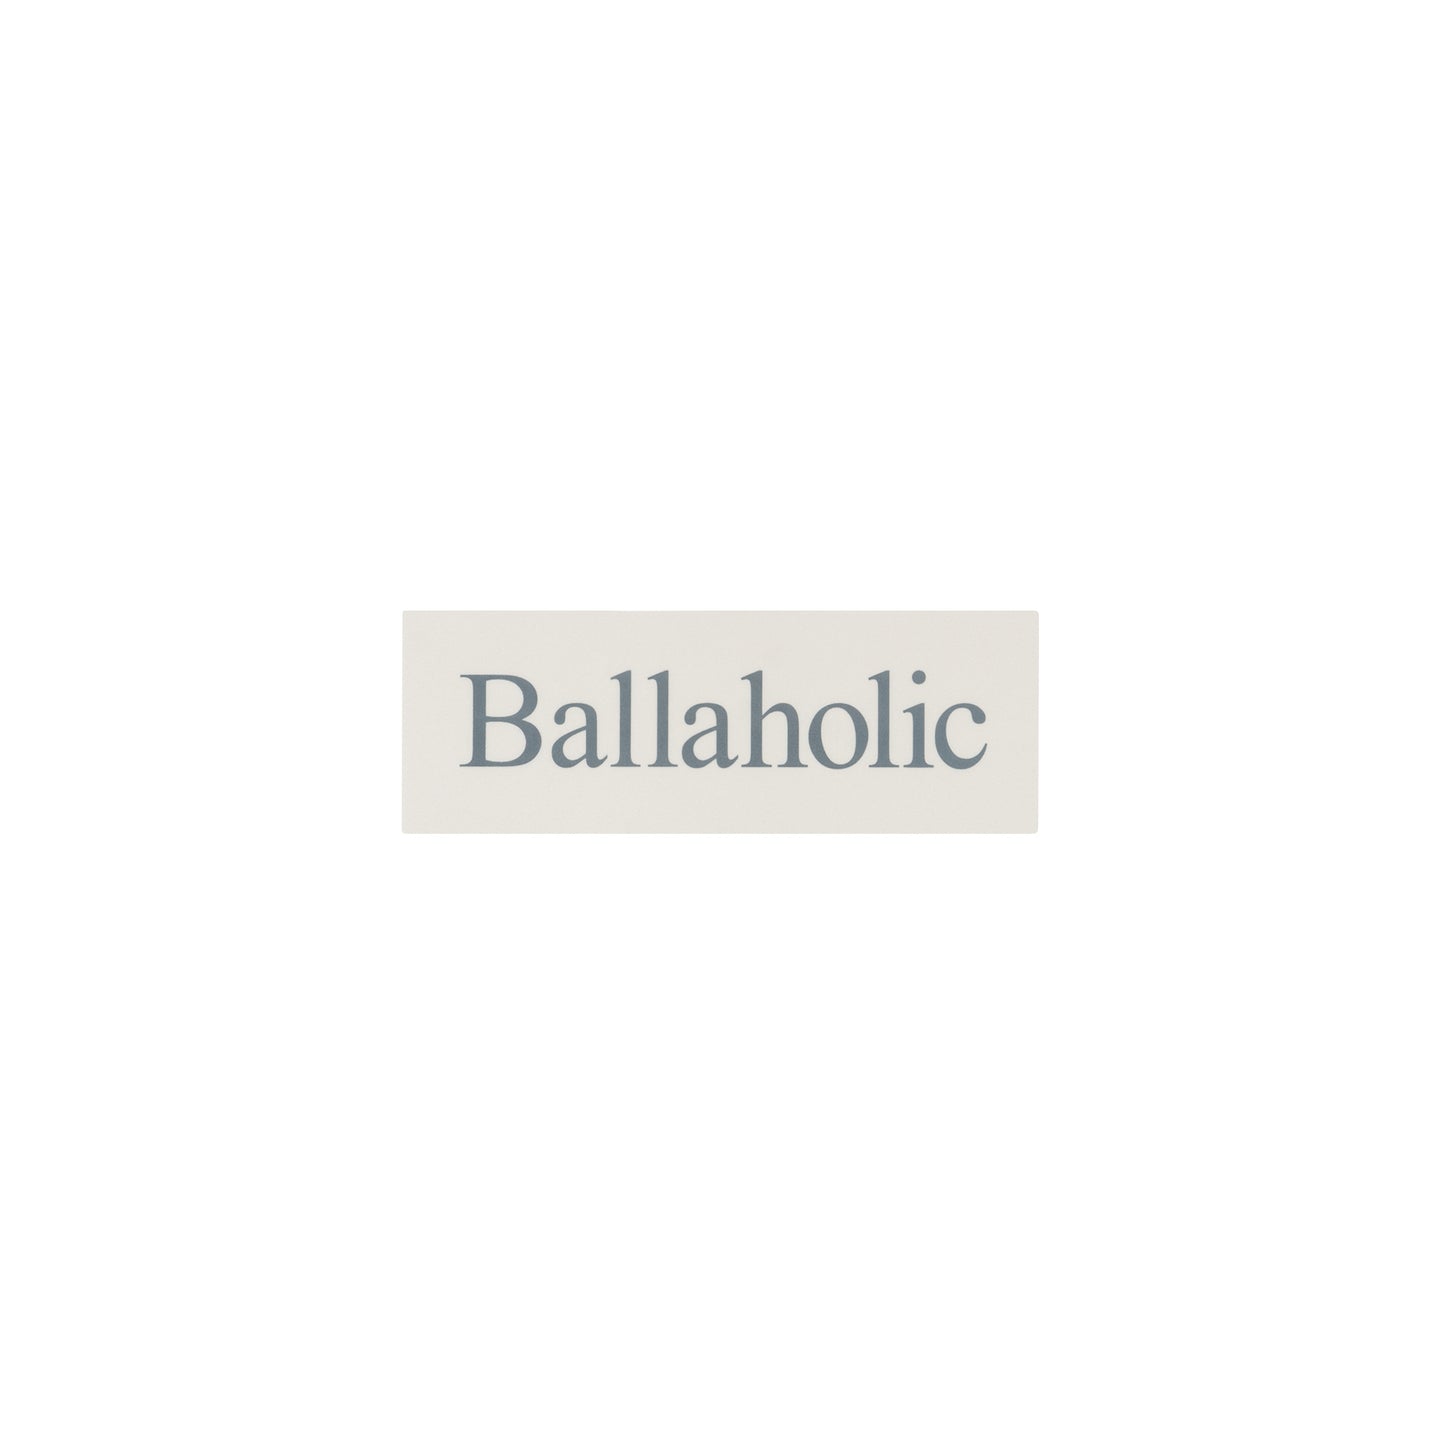 Ballaholic Photo Sticker Pack 2